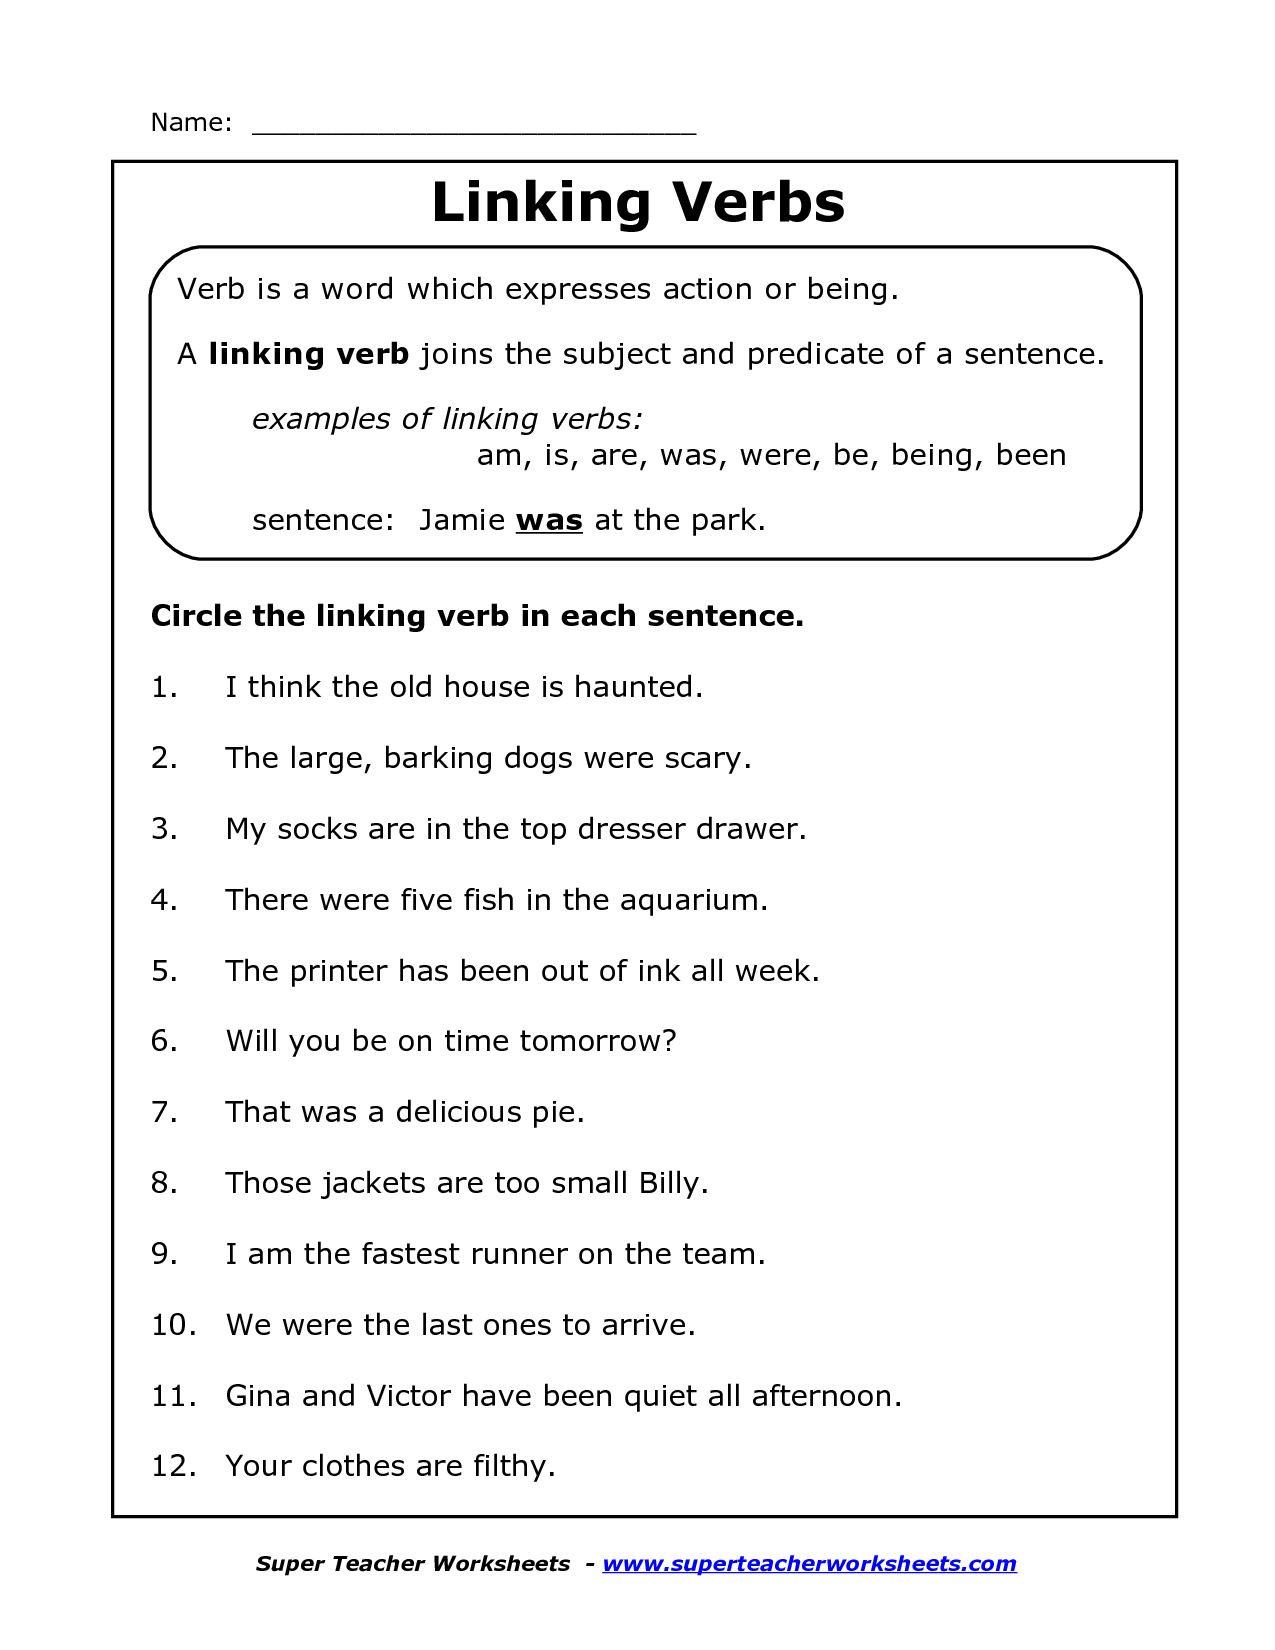 Study Action And Linking Verbs Worksheet 5Th Grade Danasrhgtop Free Printable Linking Verbs